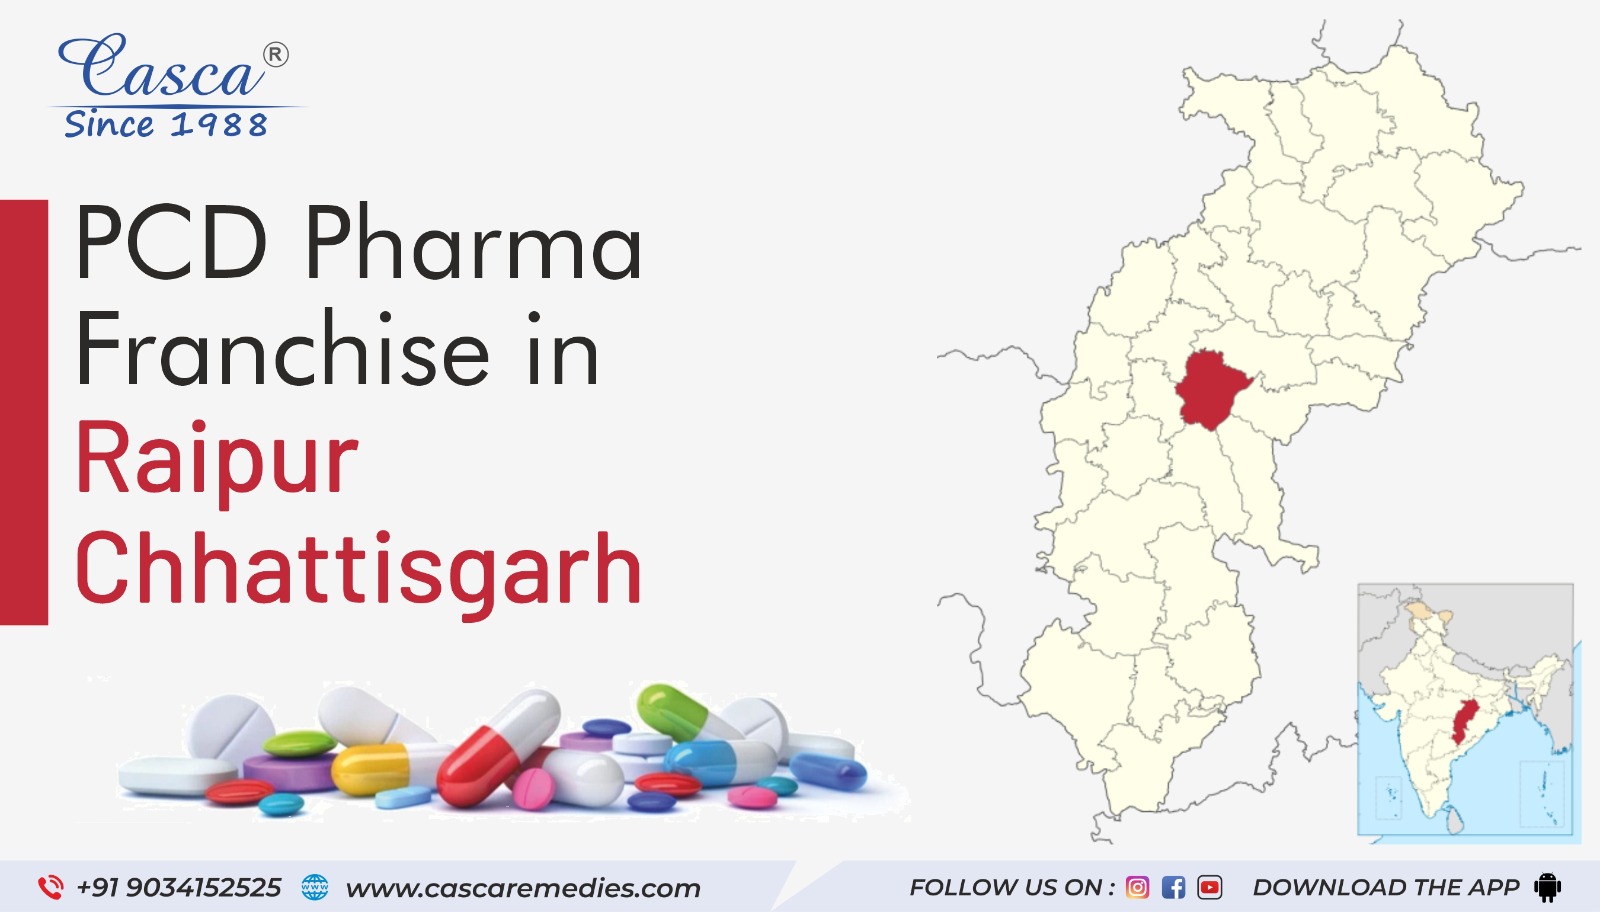 PCD Pharma Franchise in Raipur Chhattisgarh